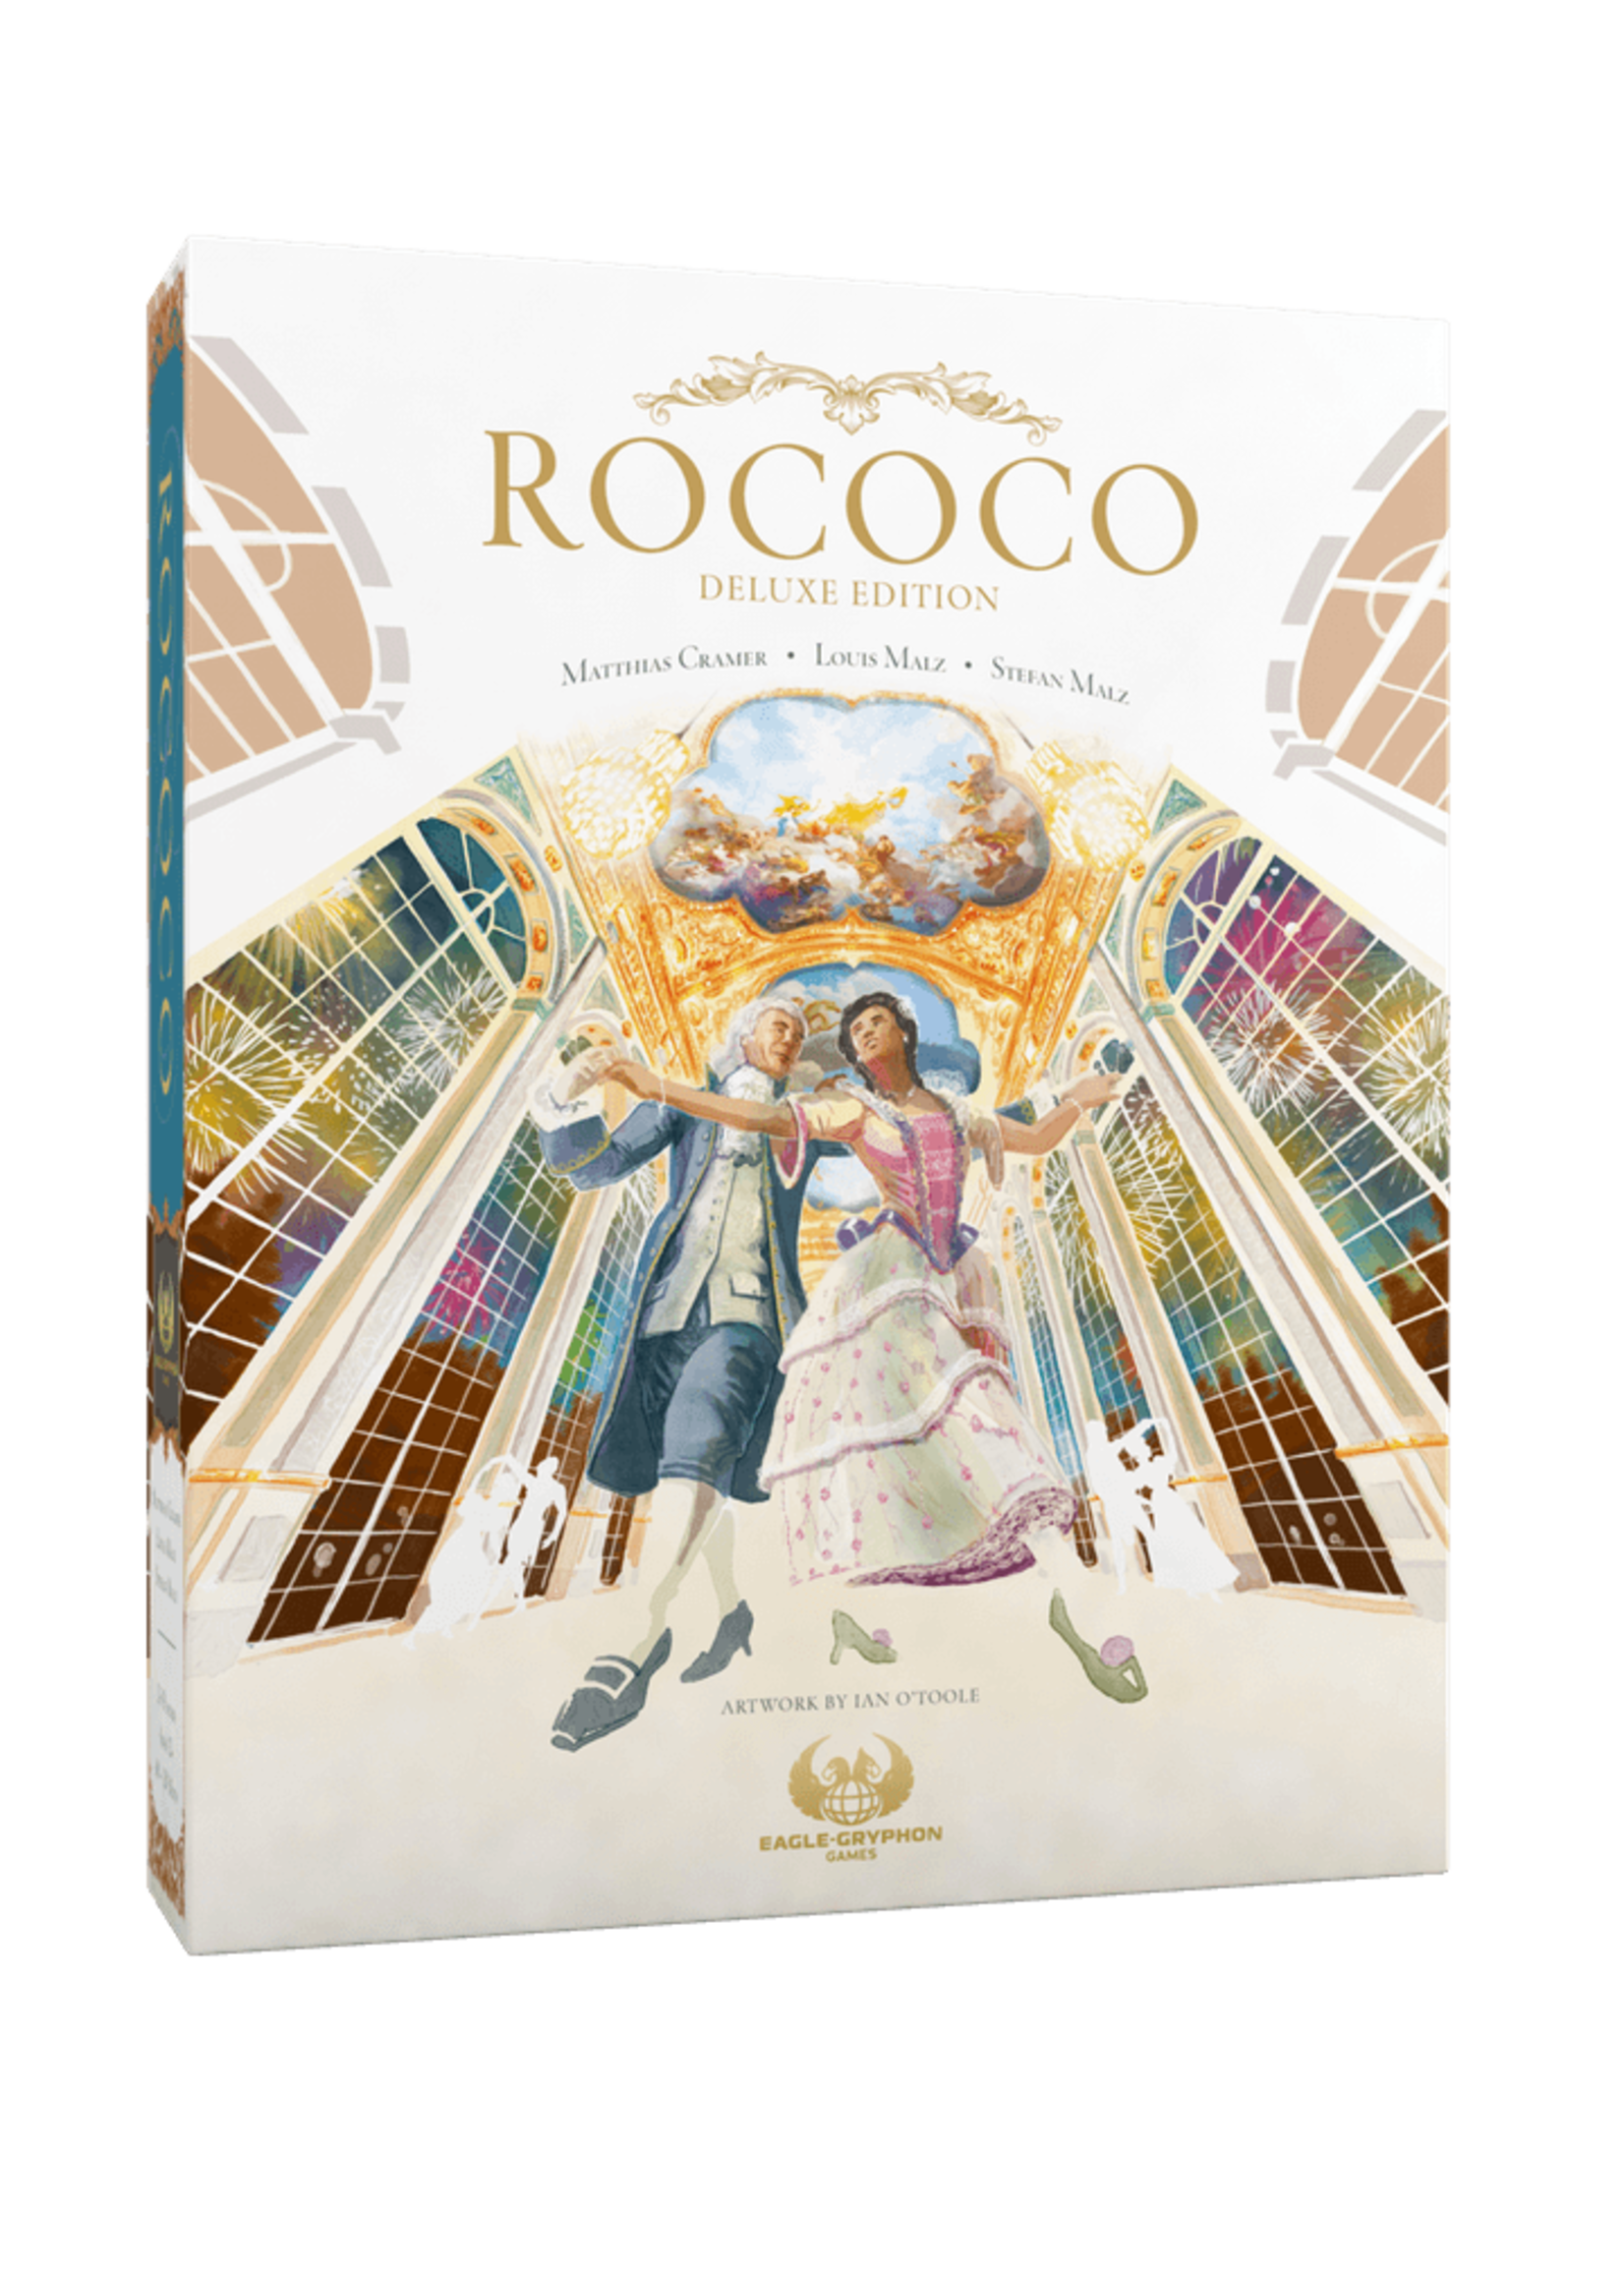 Eagle-Gryphon Games Rococo: Deluxe Edition